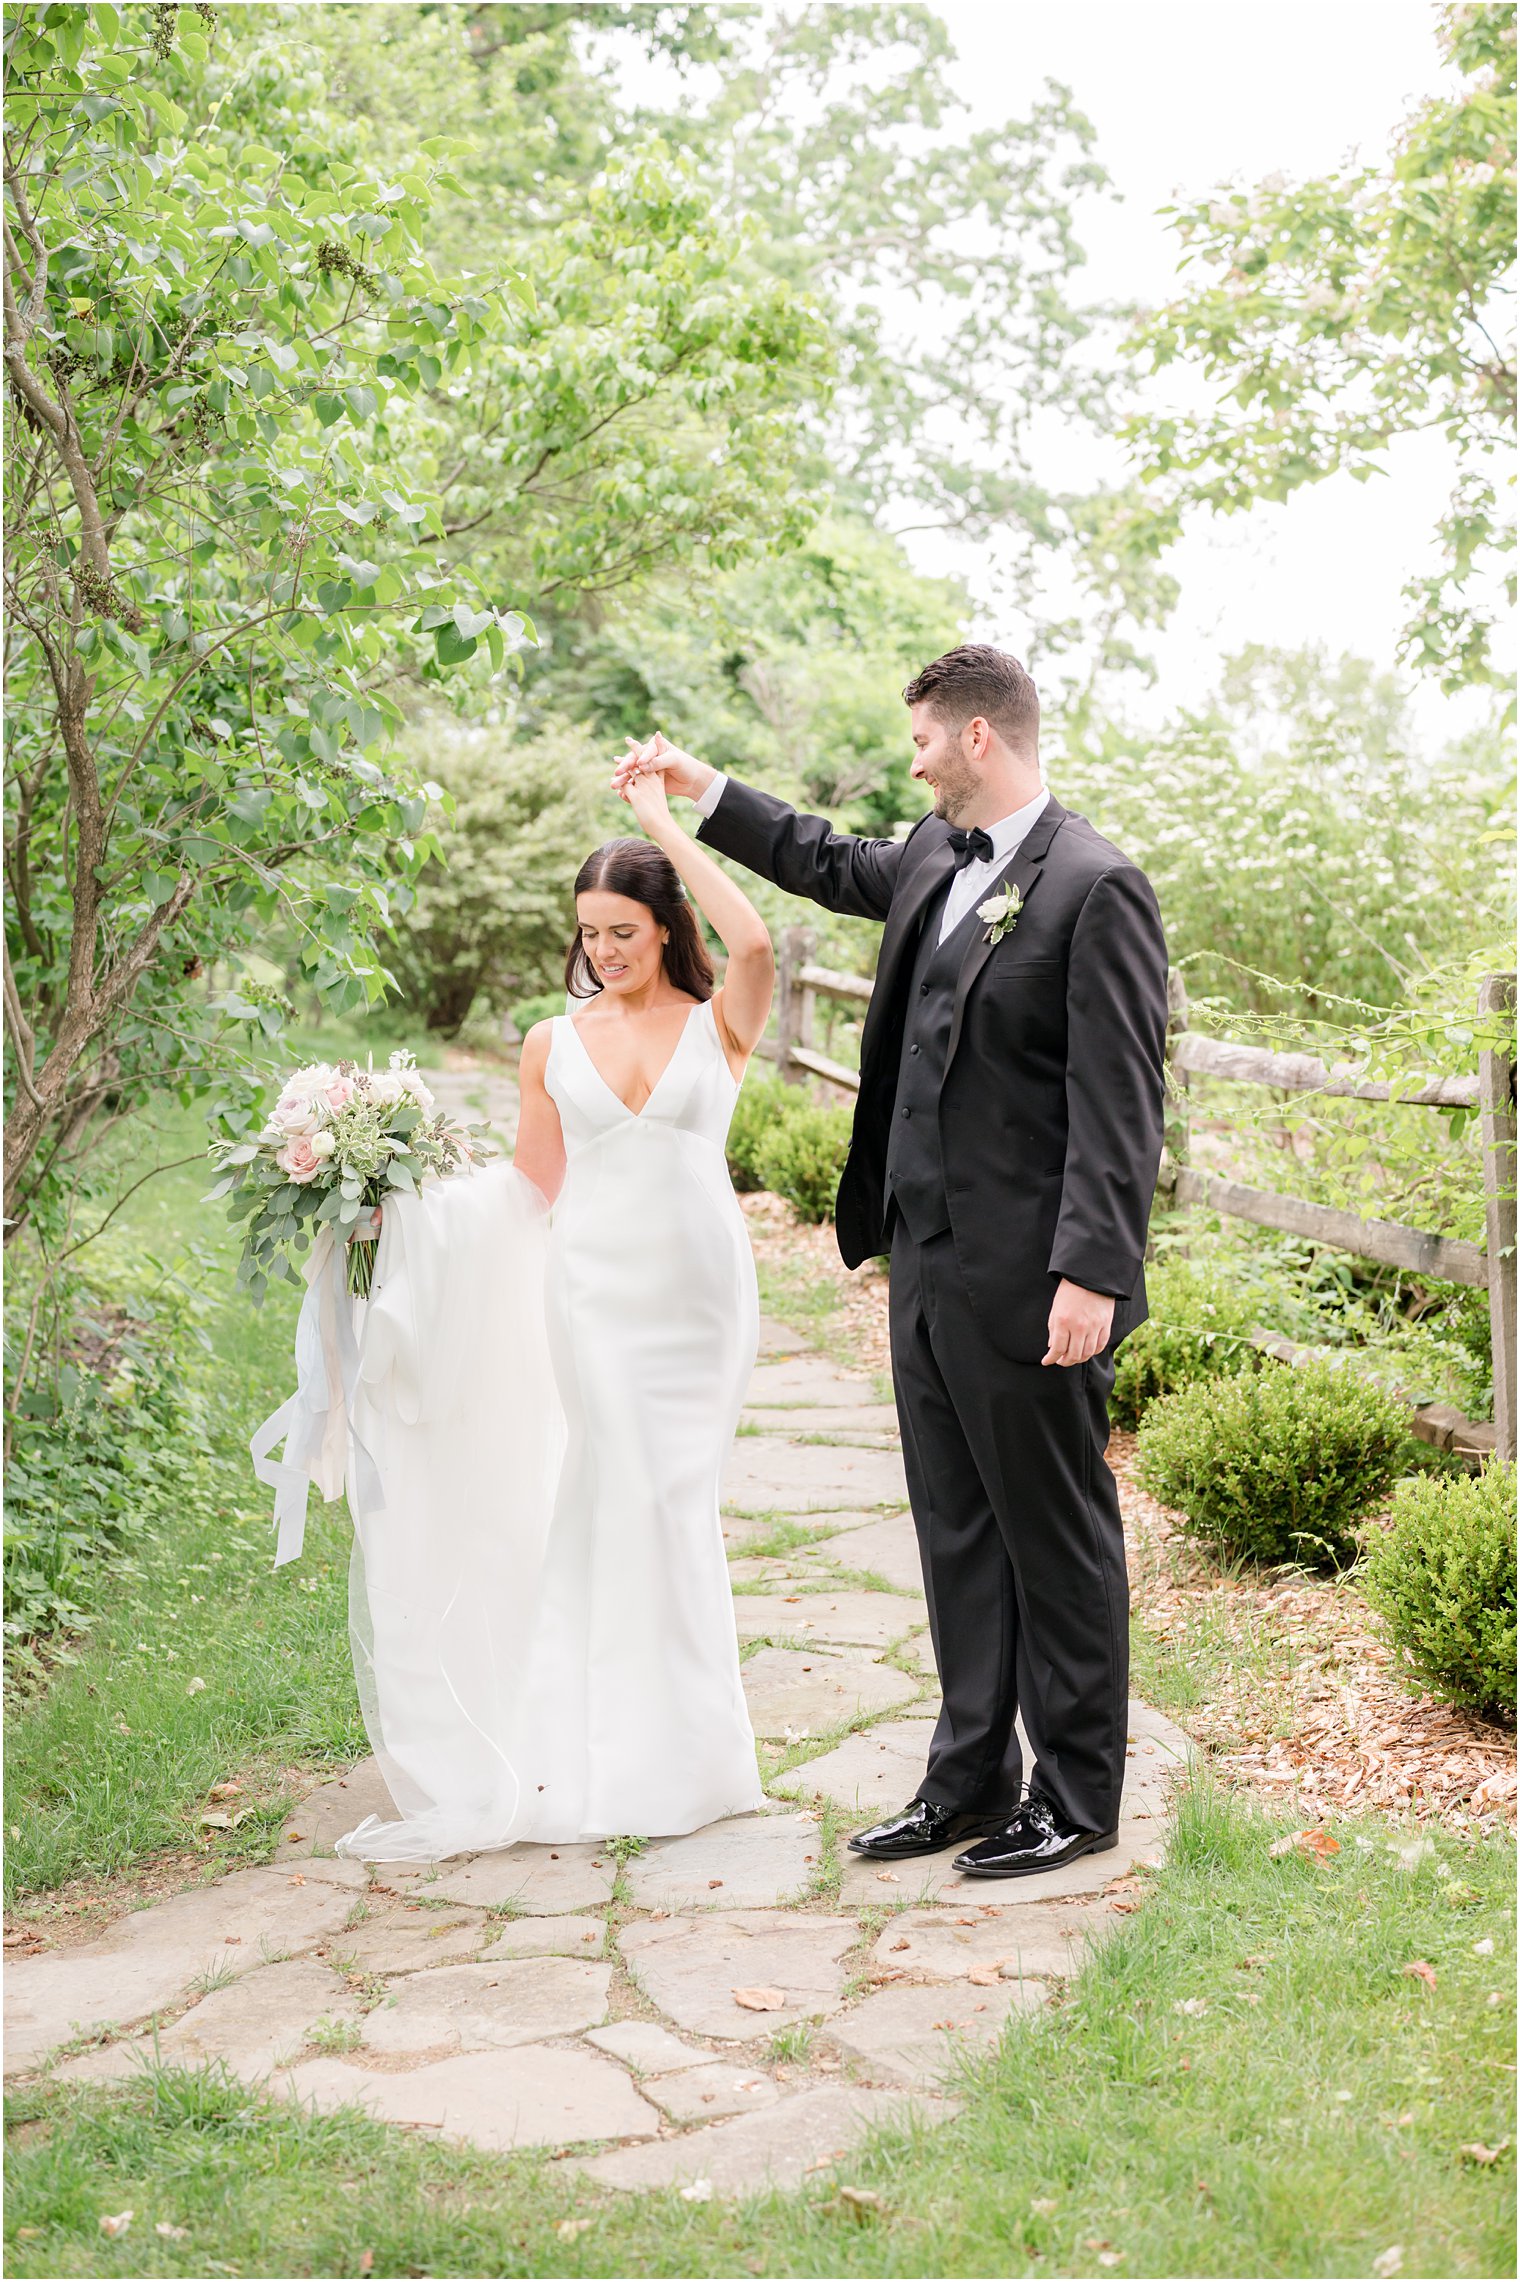 groom twirling his bride in wedding attire